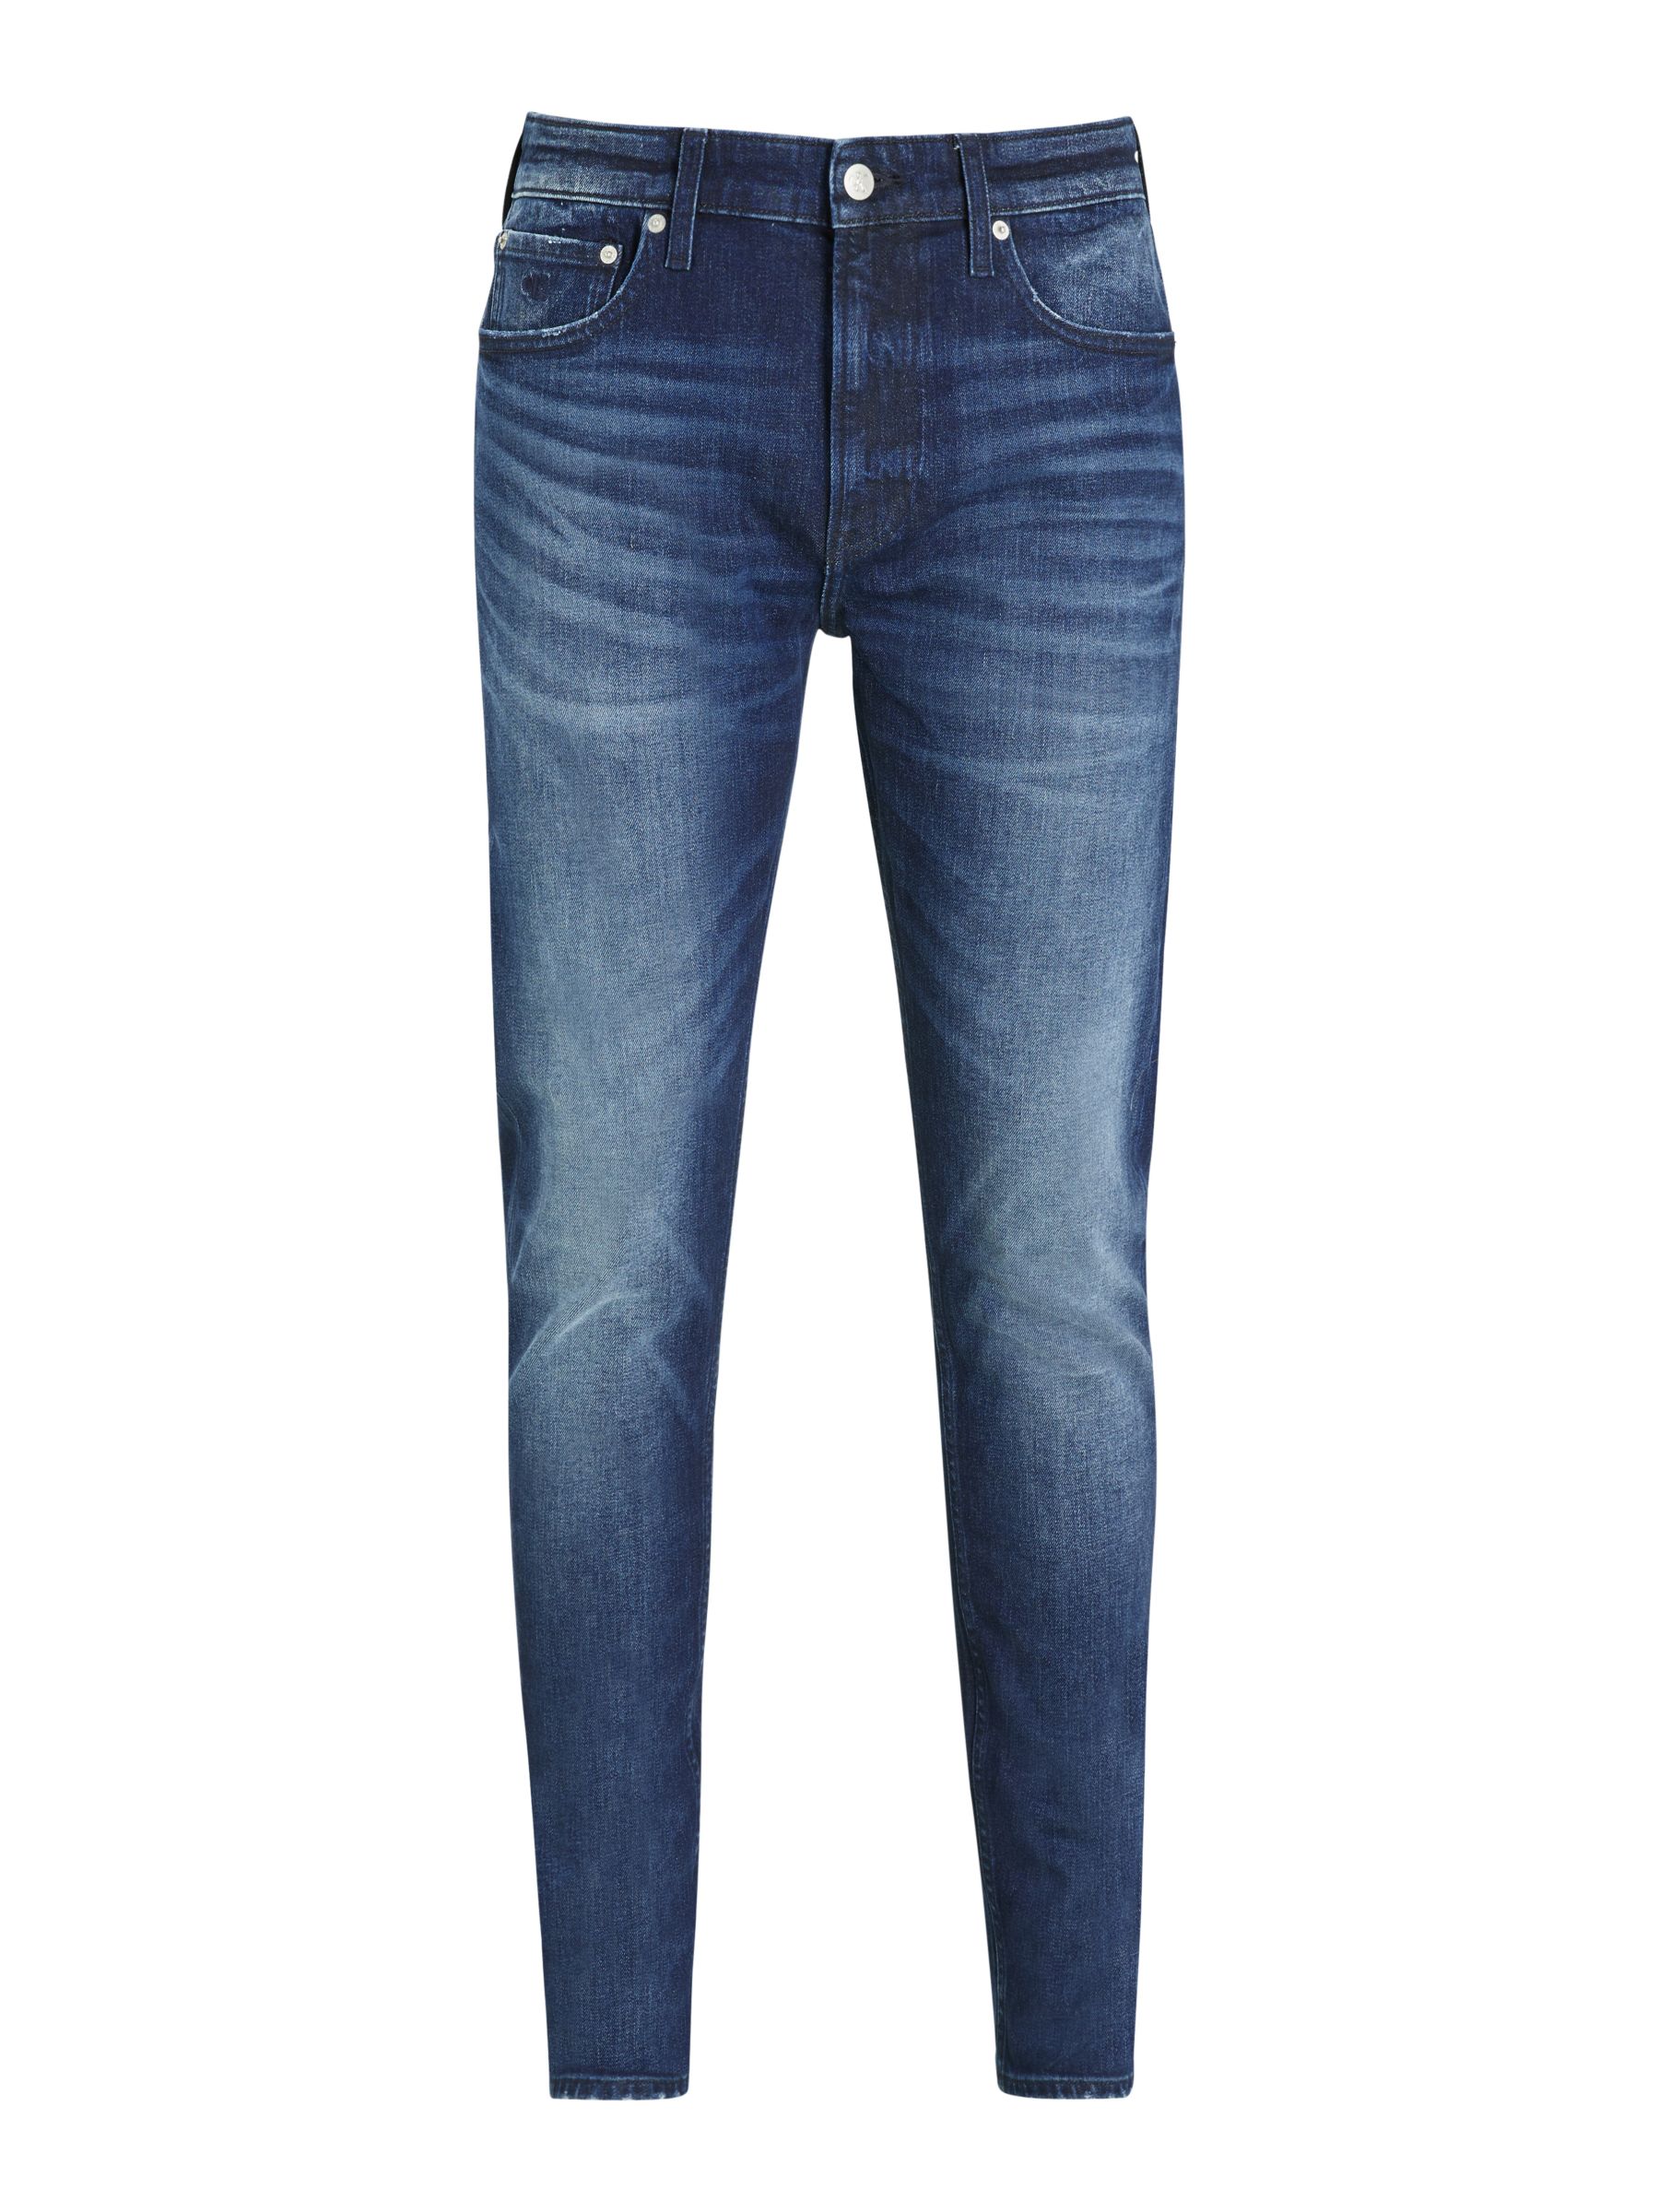 Calvin Klein Jeans Slim Taper Jeans, Dark Blue